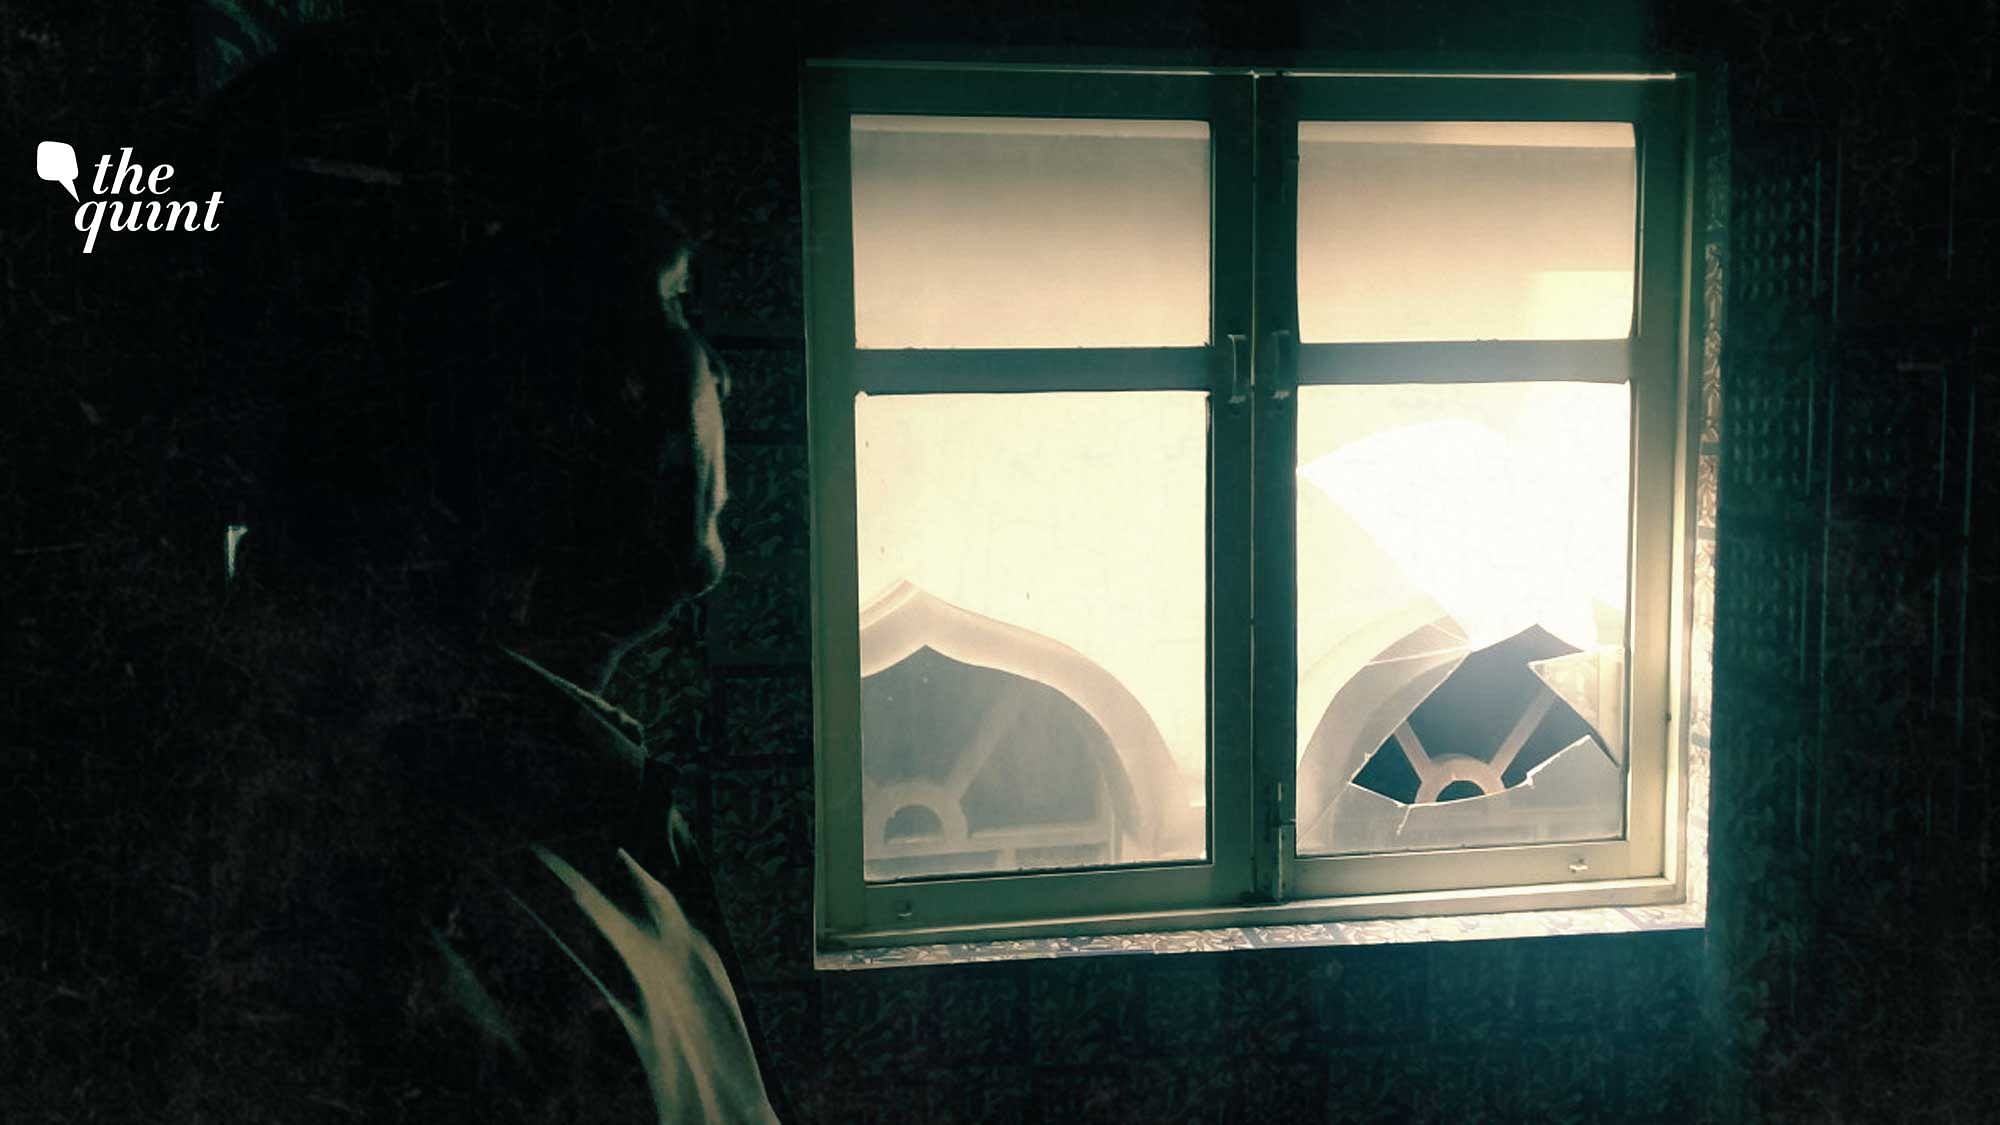 Ali Ahmed looks at the vandalised mosque from the broken window of his residence in Karawal nagar in northeast Delhi.